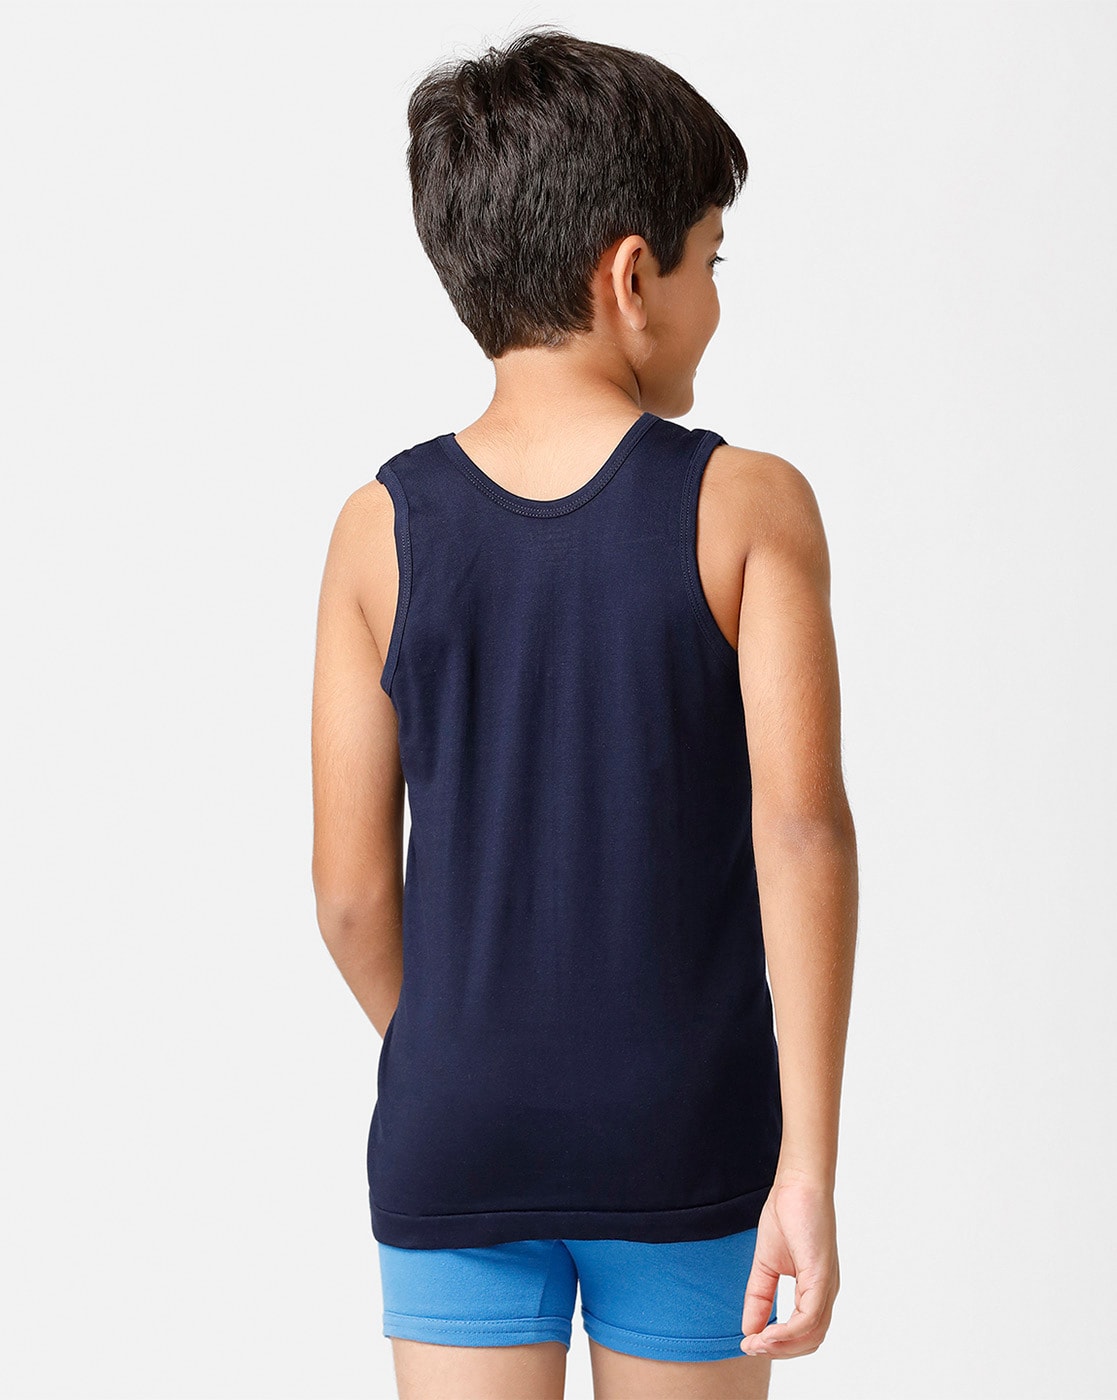 Buy RAMRAJ COTTON Boys Multicolour Assorted Innerwear Vests Pack